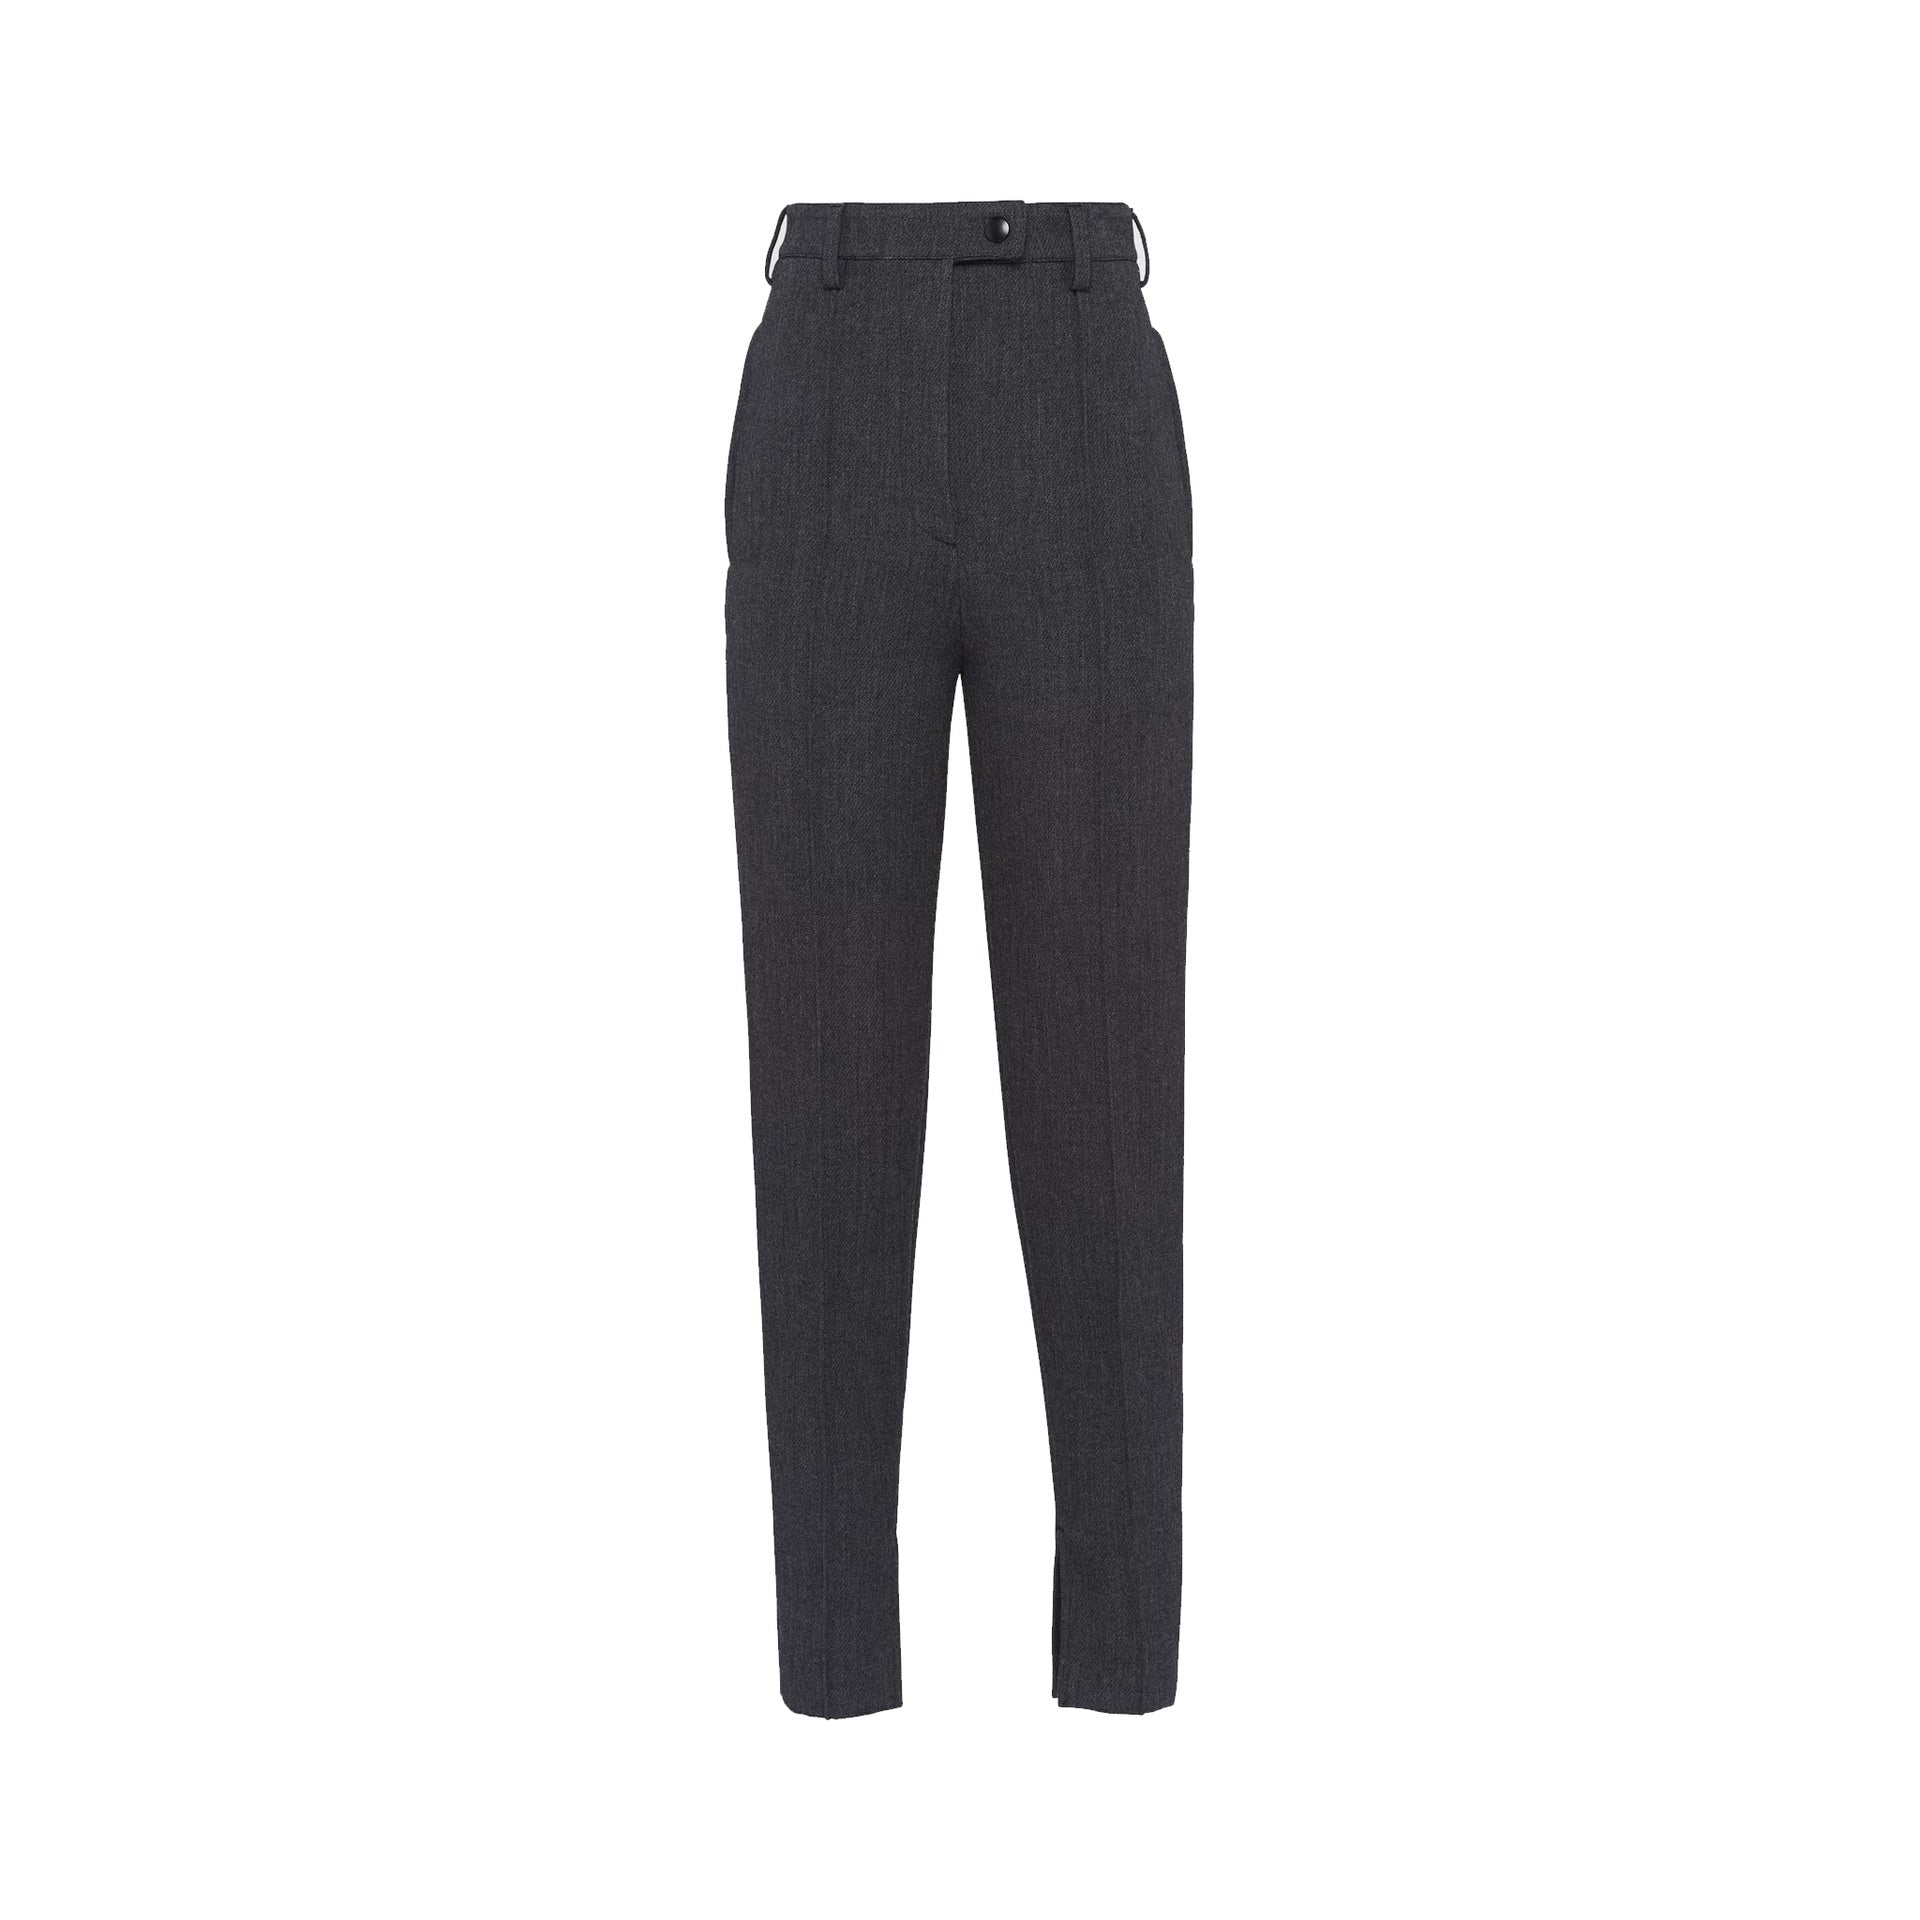 PRADA-Outlet-Sale-Prada Wool Pants-WOMEN CLOTHING-GREY-40-ARCHIVIST